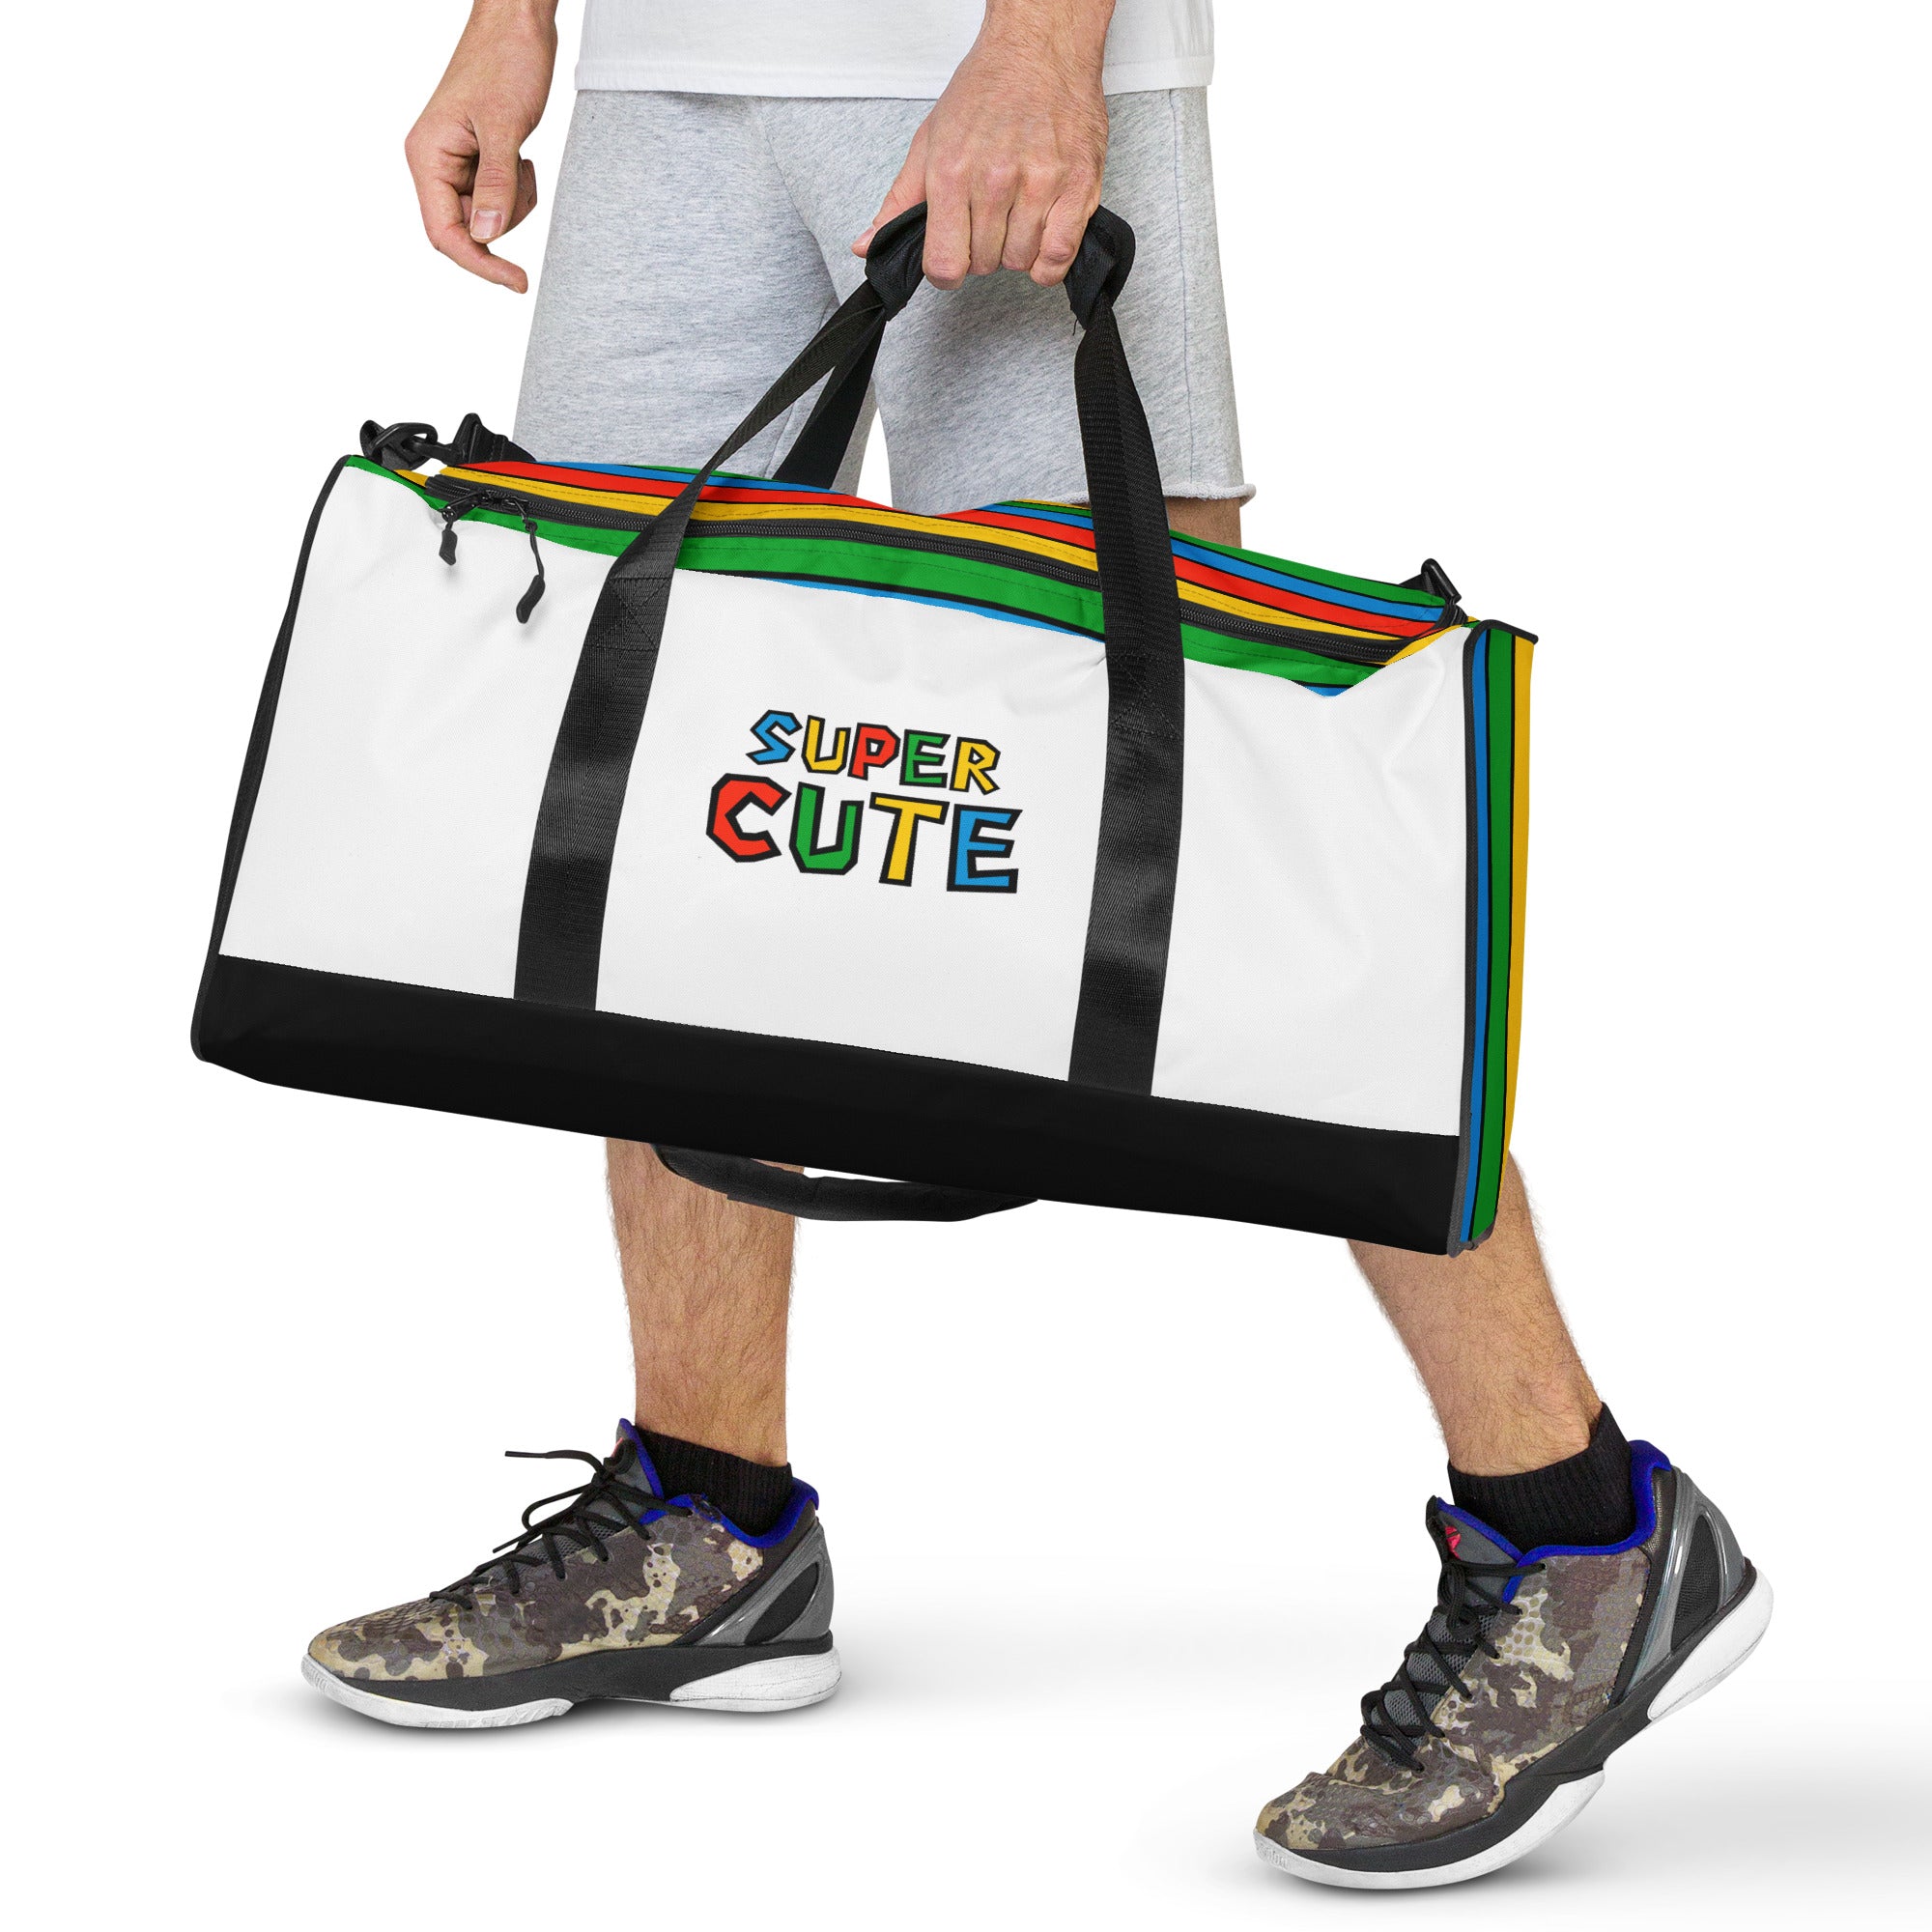 Super Cute Duffle Bag